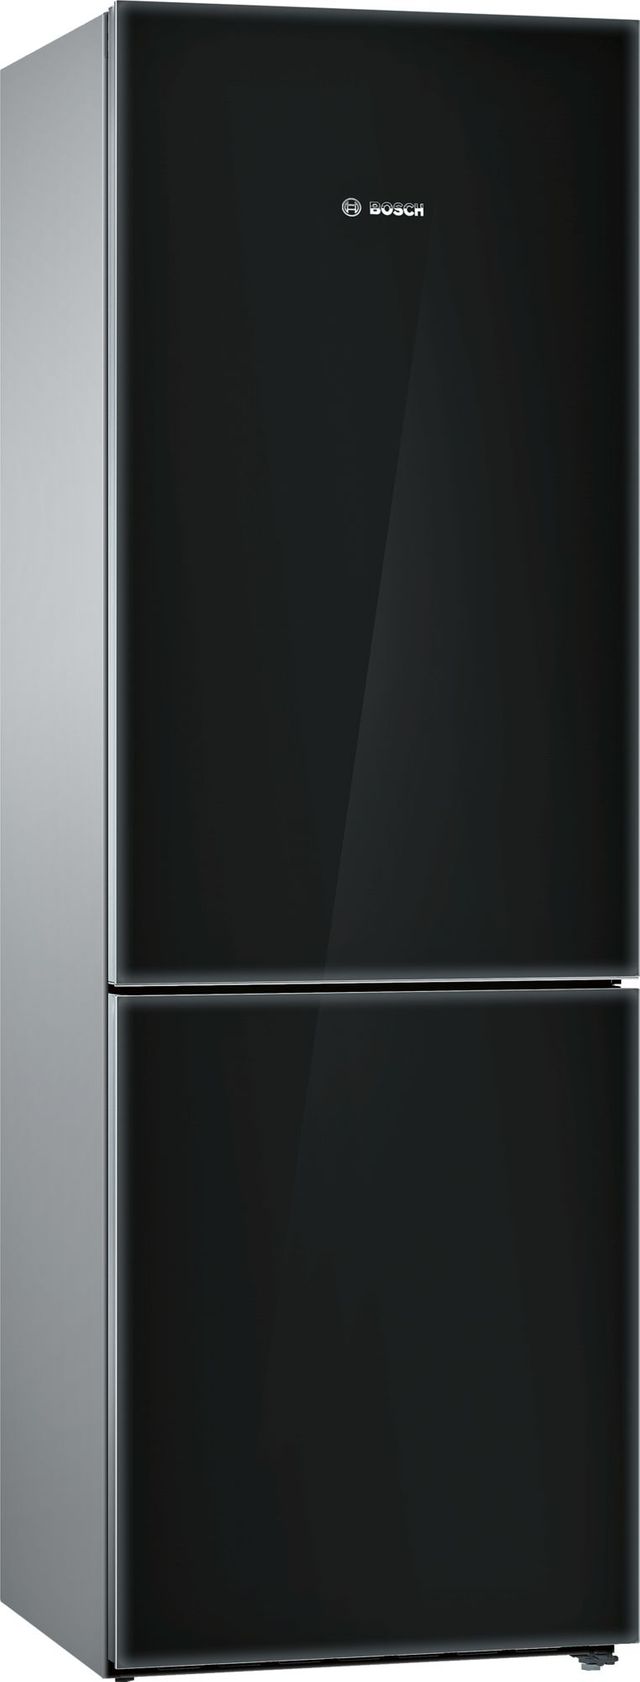 Bosch 800 Series 10.0 Cu. Ft. Black Glass Counter Depth Bottom Freezer Refrigerator 2